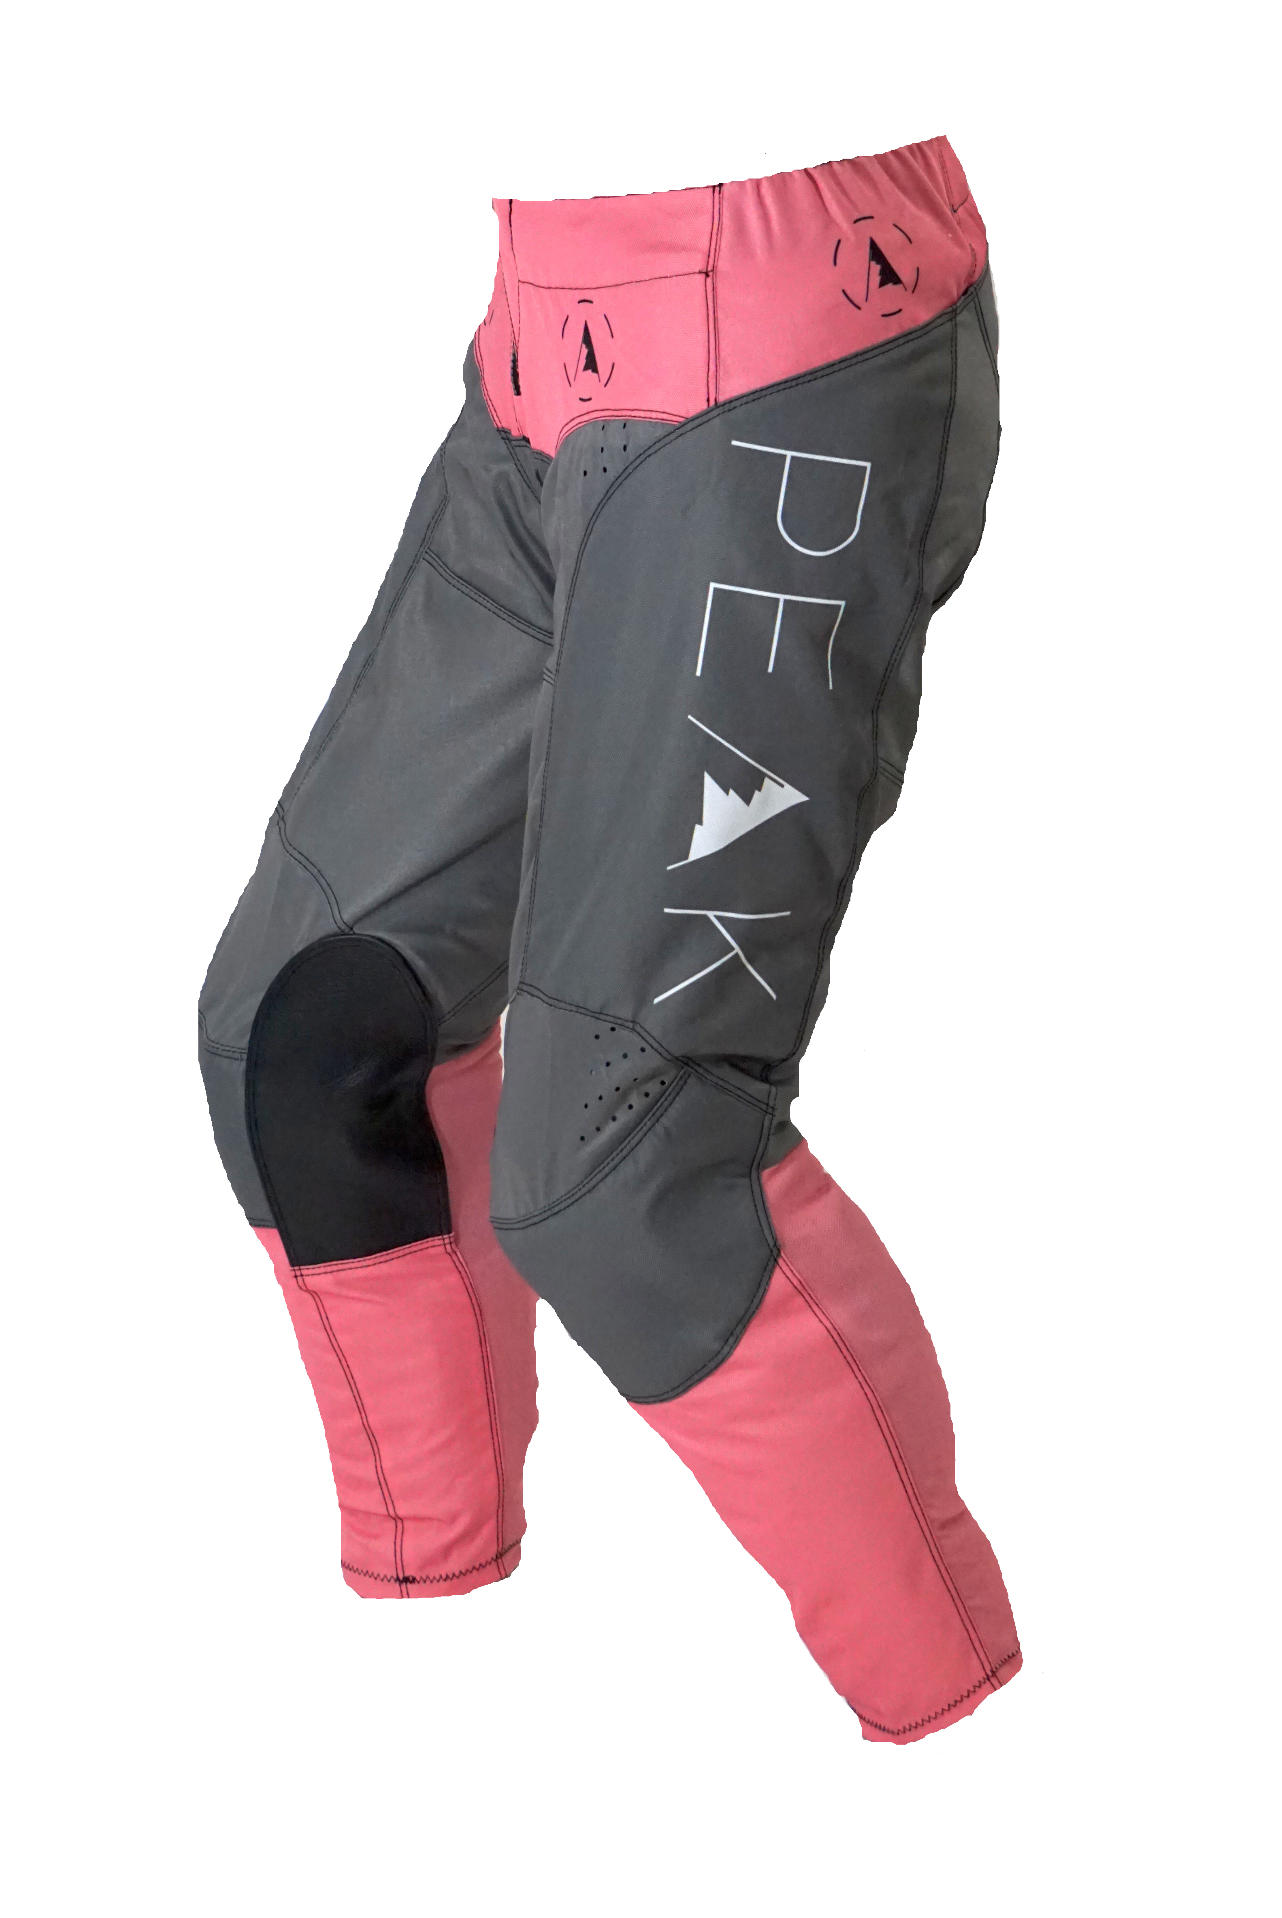 Pants Mx 22 - Pink and Gray